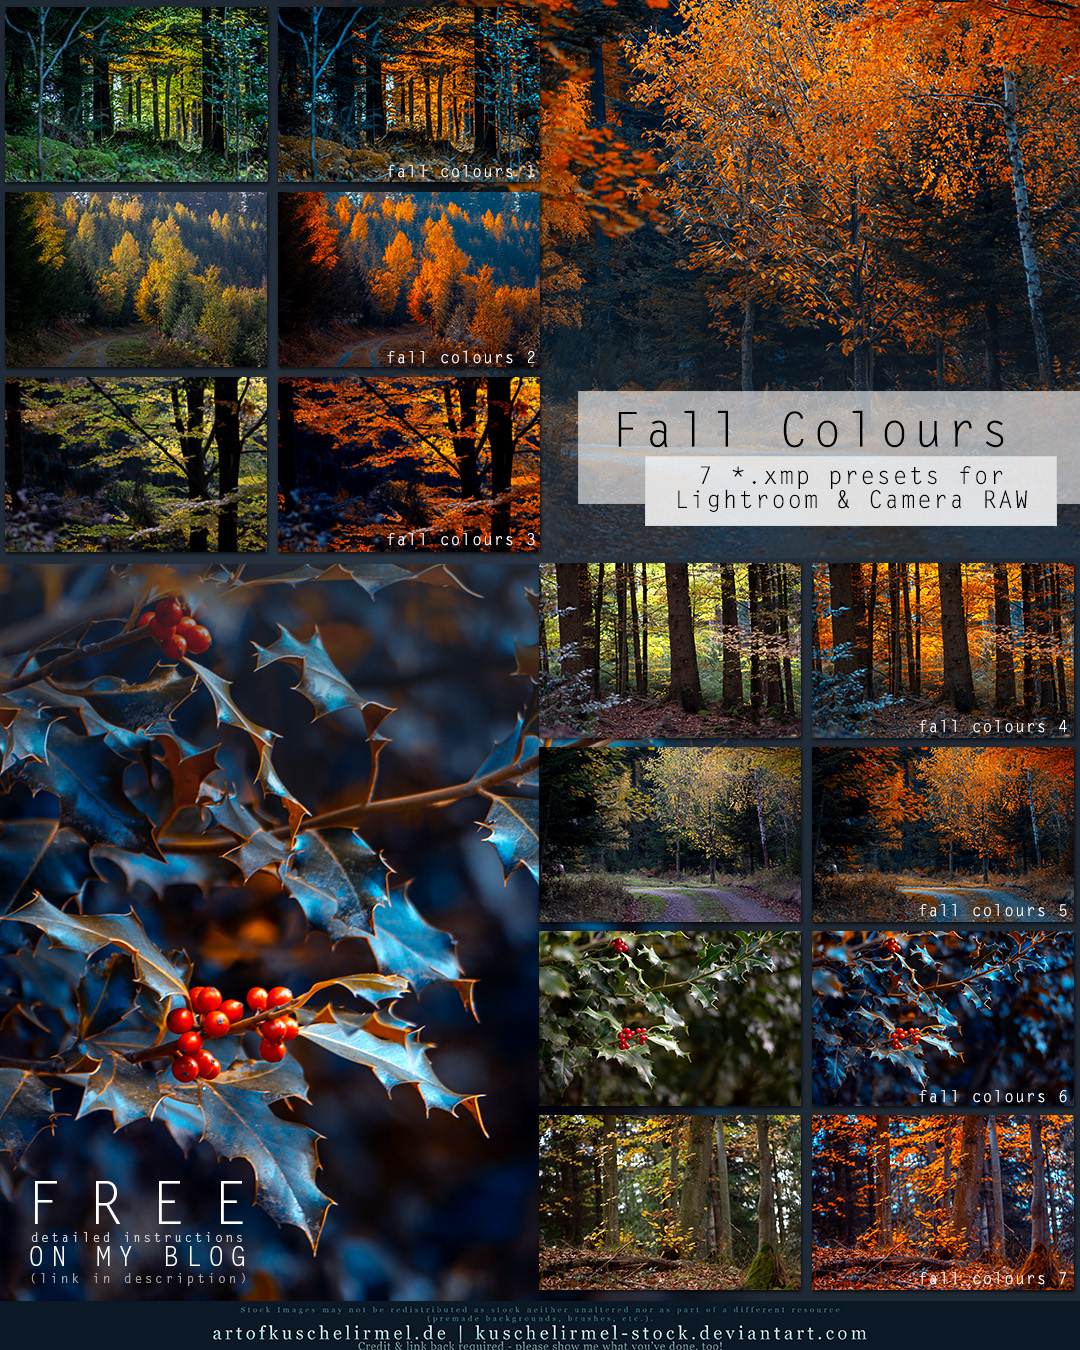 Fall Colours - Free Lightroom + CameraRAW Presets